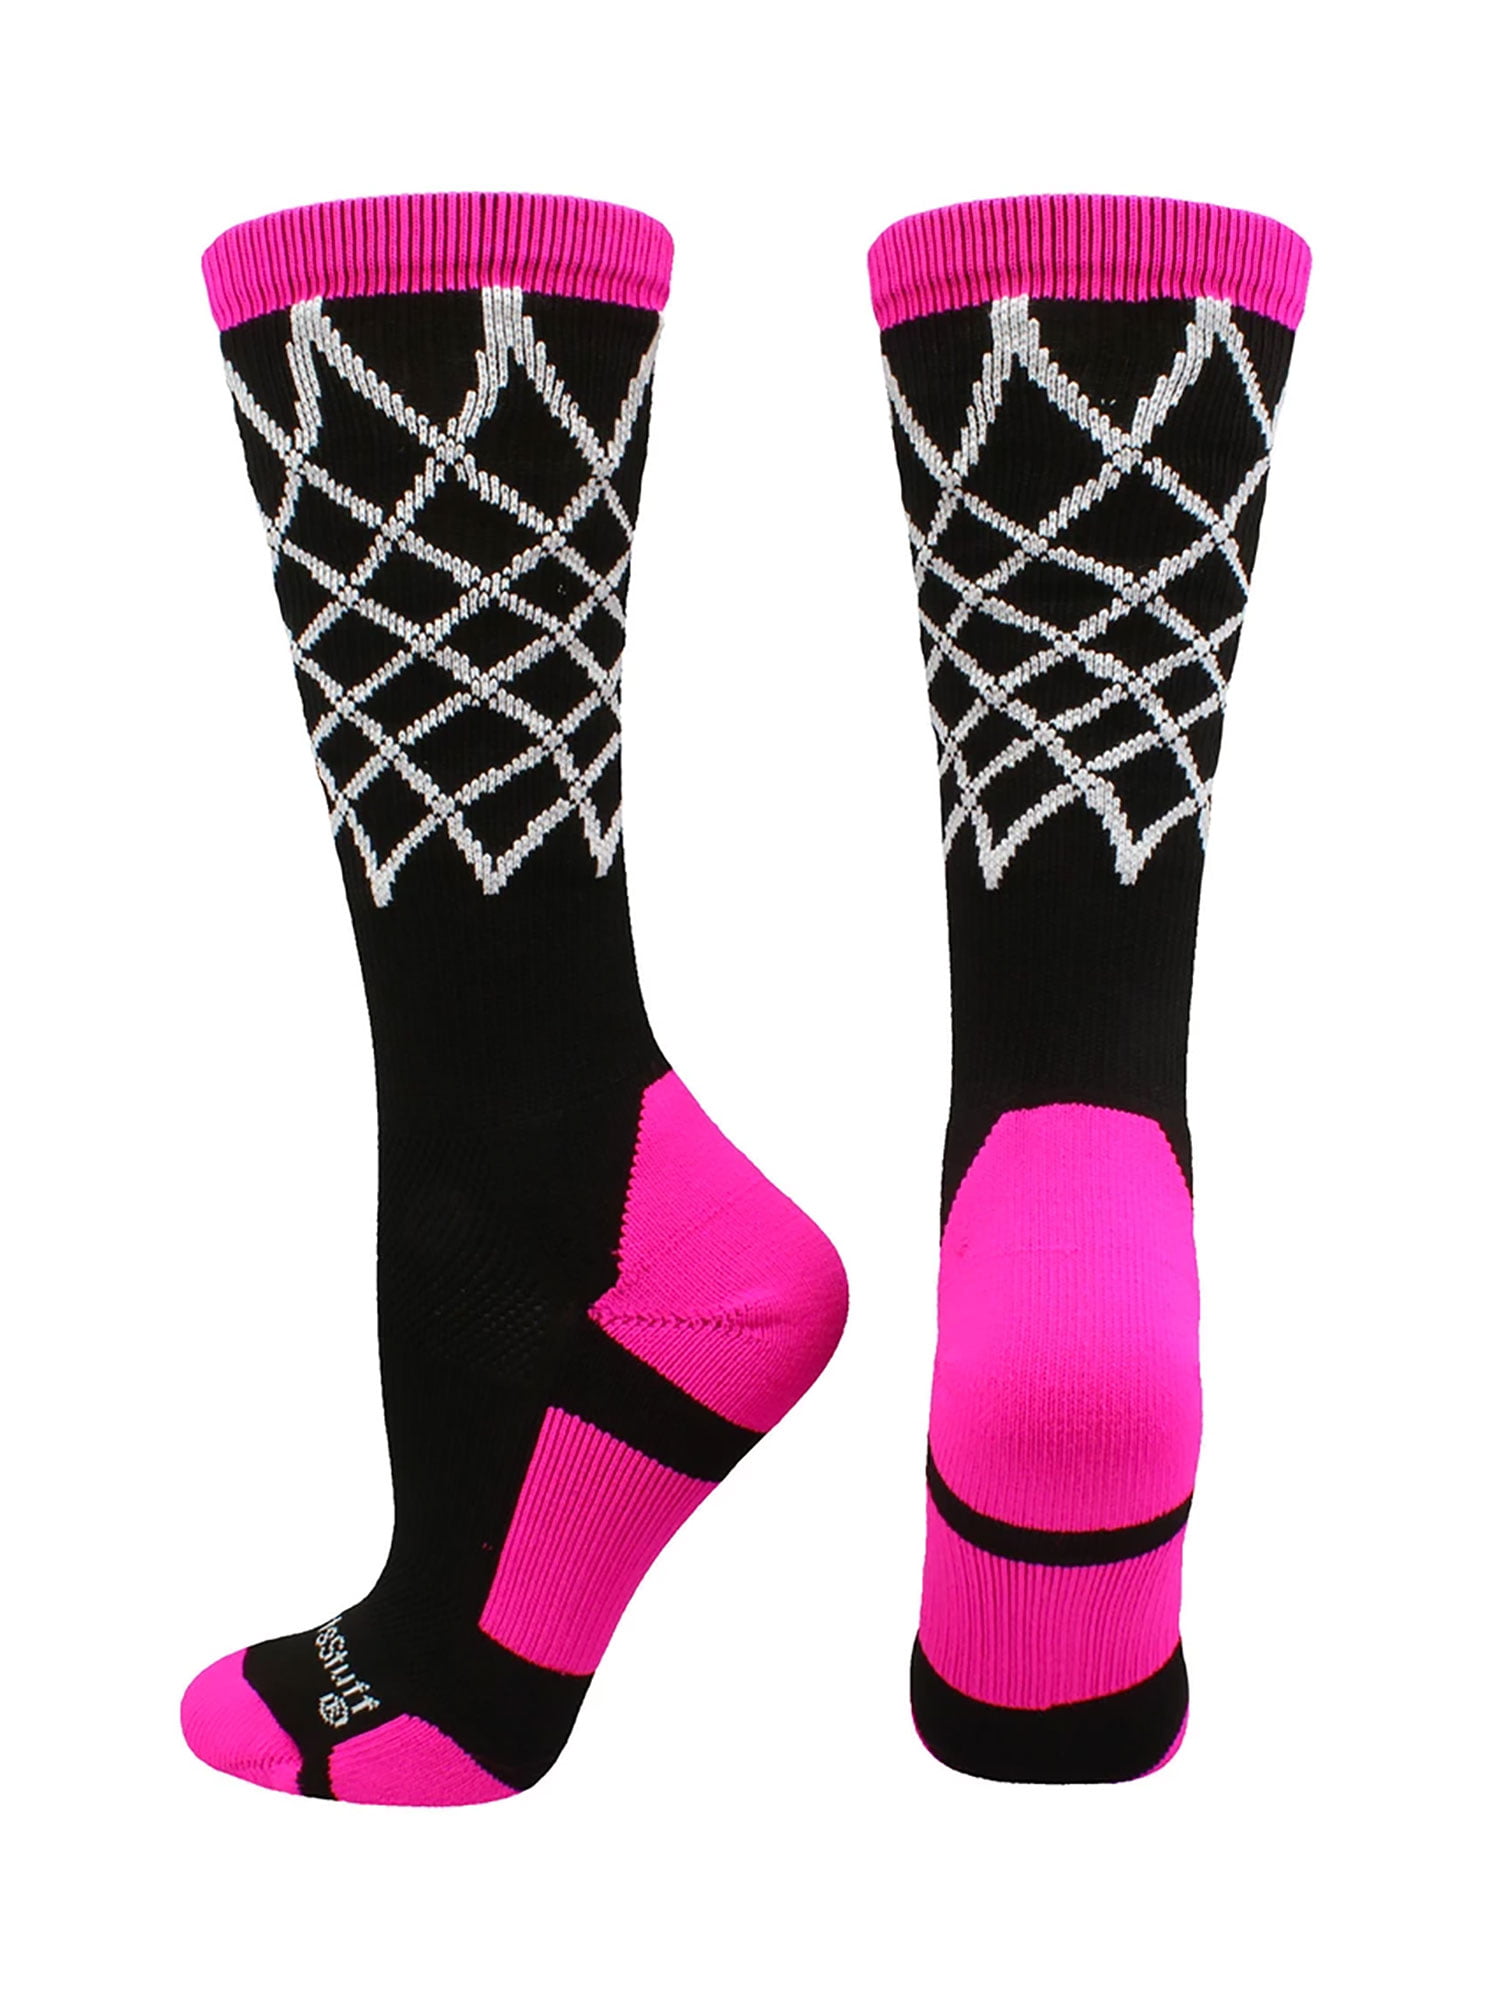 Crew Length Elite Basketball Socks with 